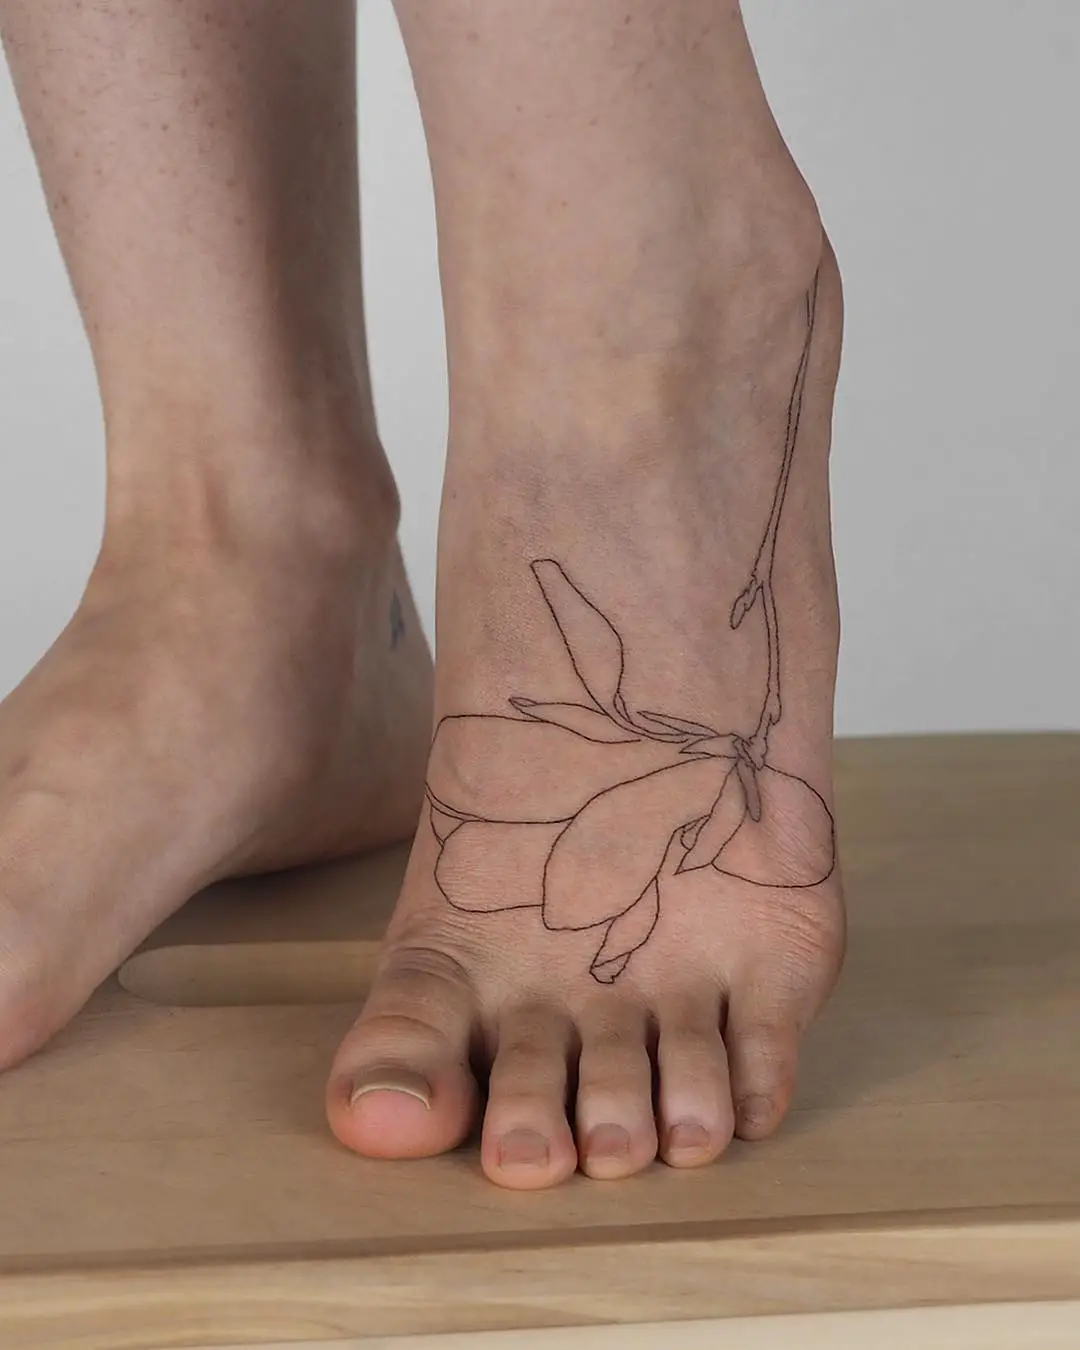 unique foot design by lazytimemagician